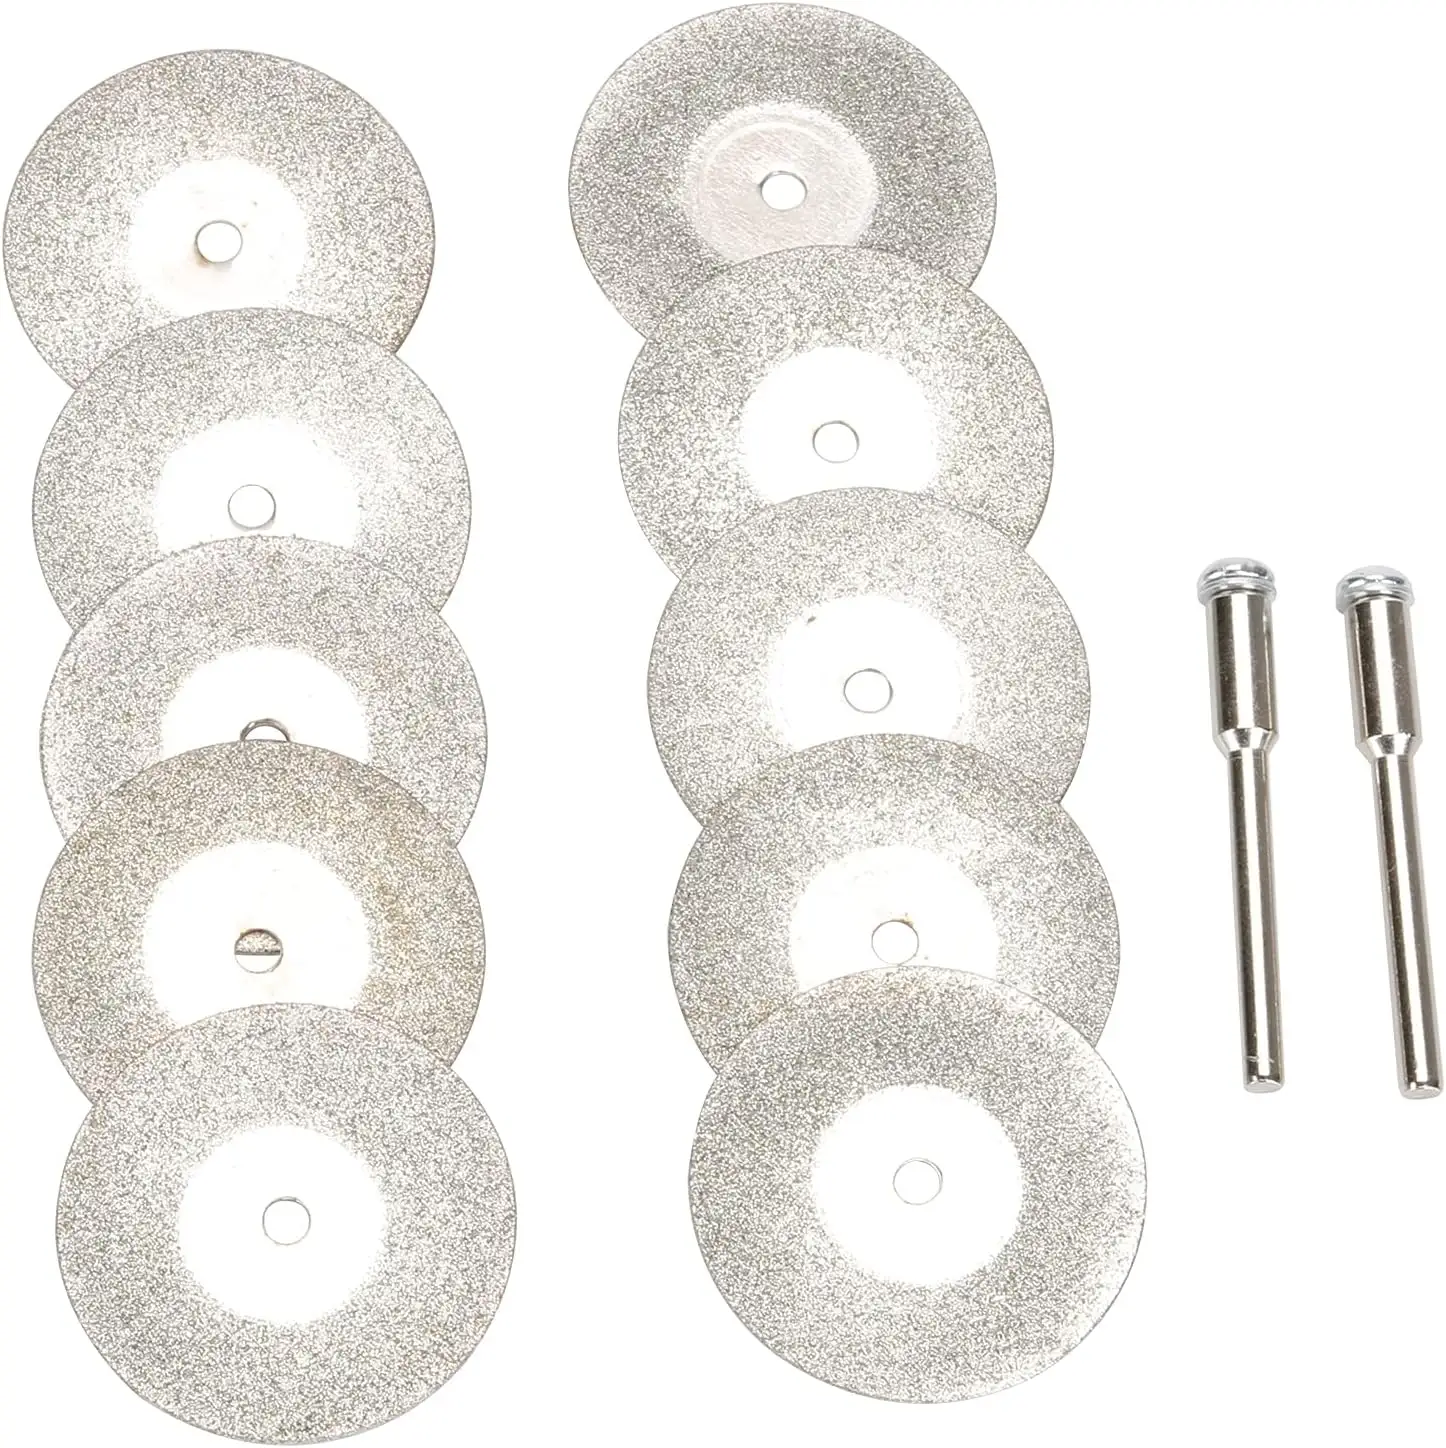 Dremel tool mini cutting disc dry and wet cut off diamond cutting wheel disc mandrel for dremel rotary tools